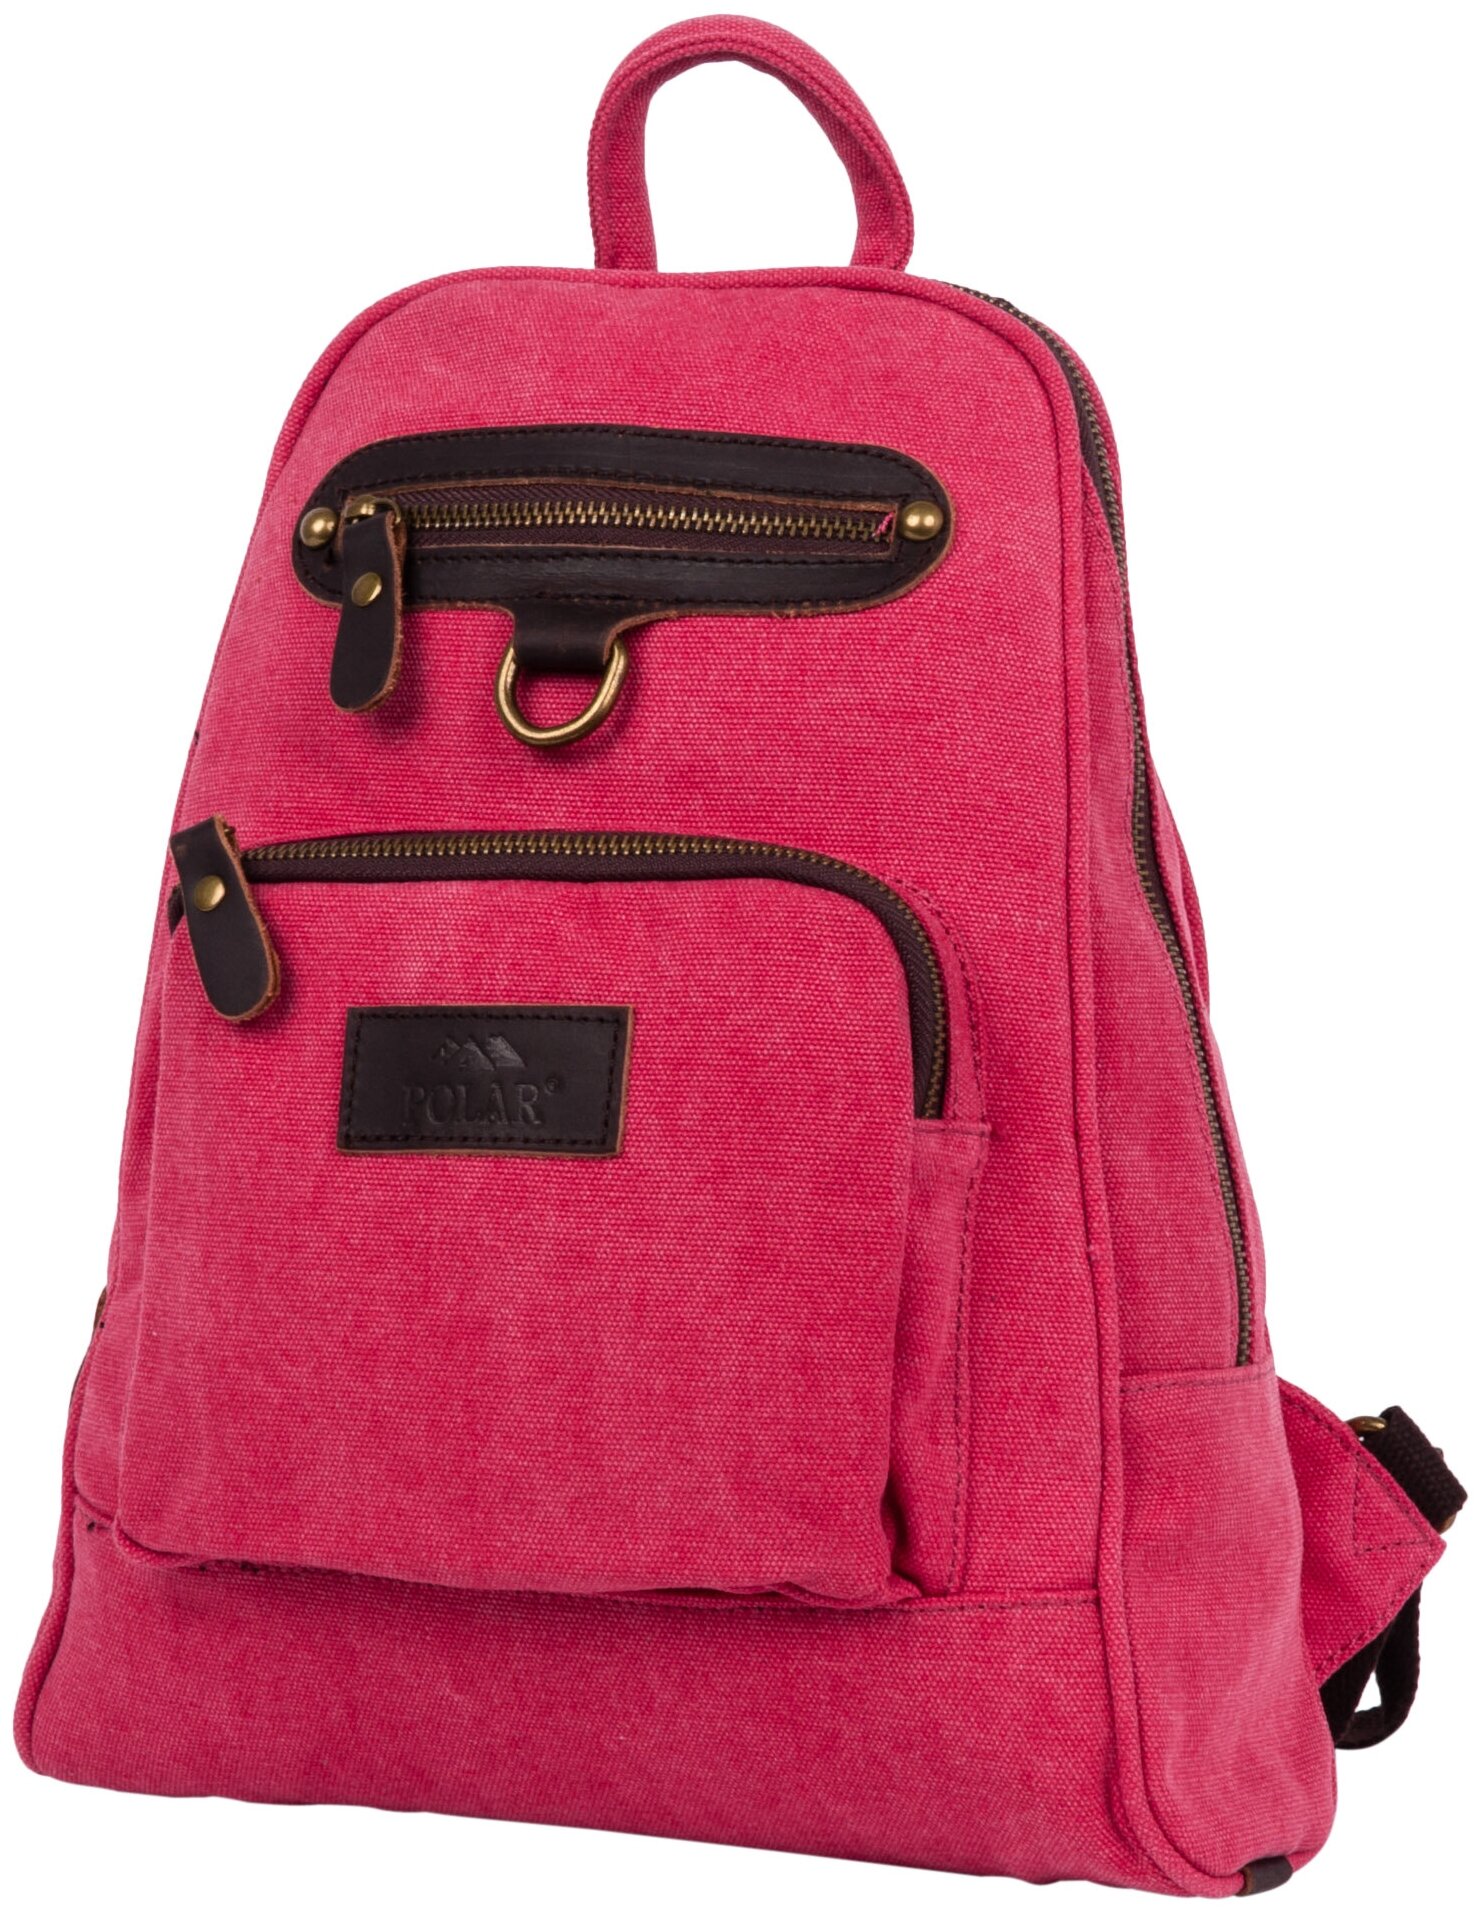 Рюкзак Polar П8001б Розовый